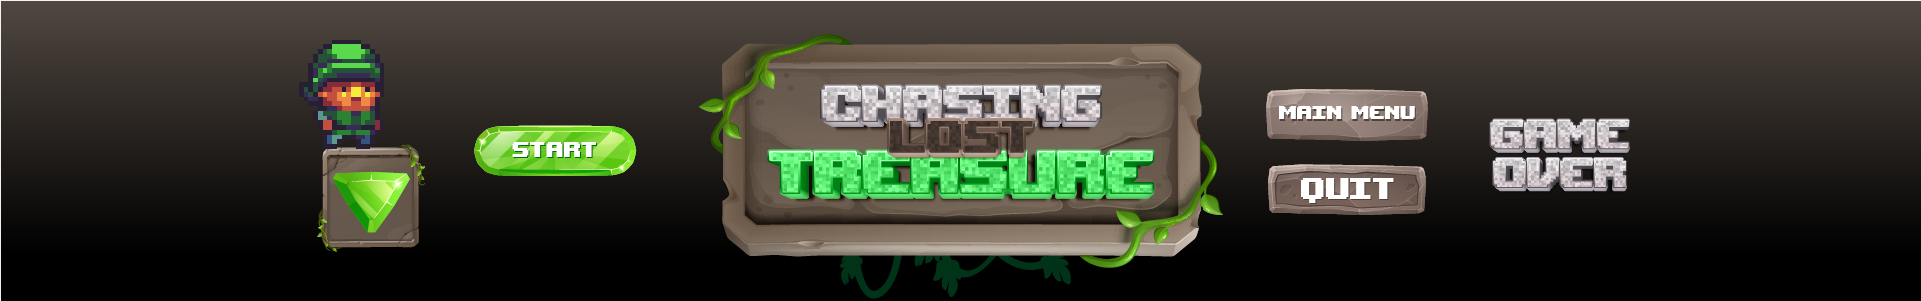 Chasing Lost Treasure